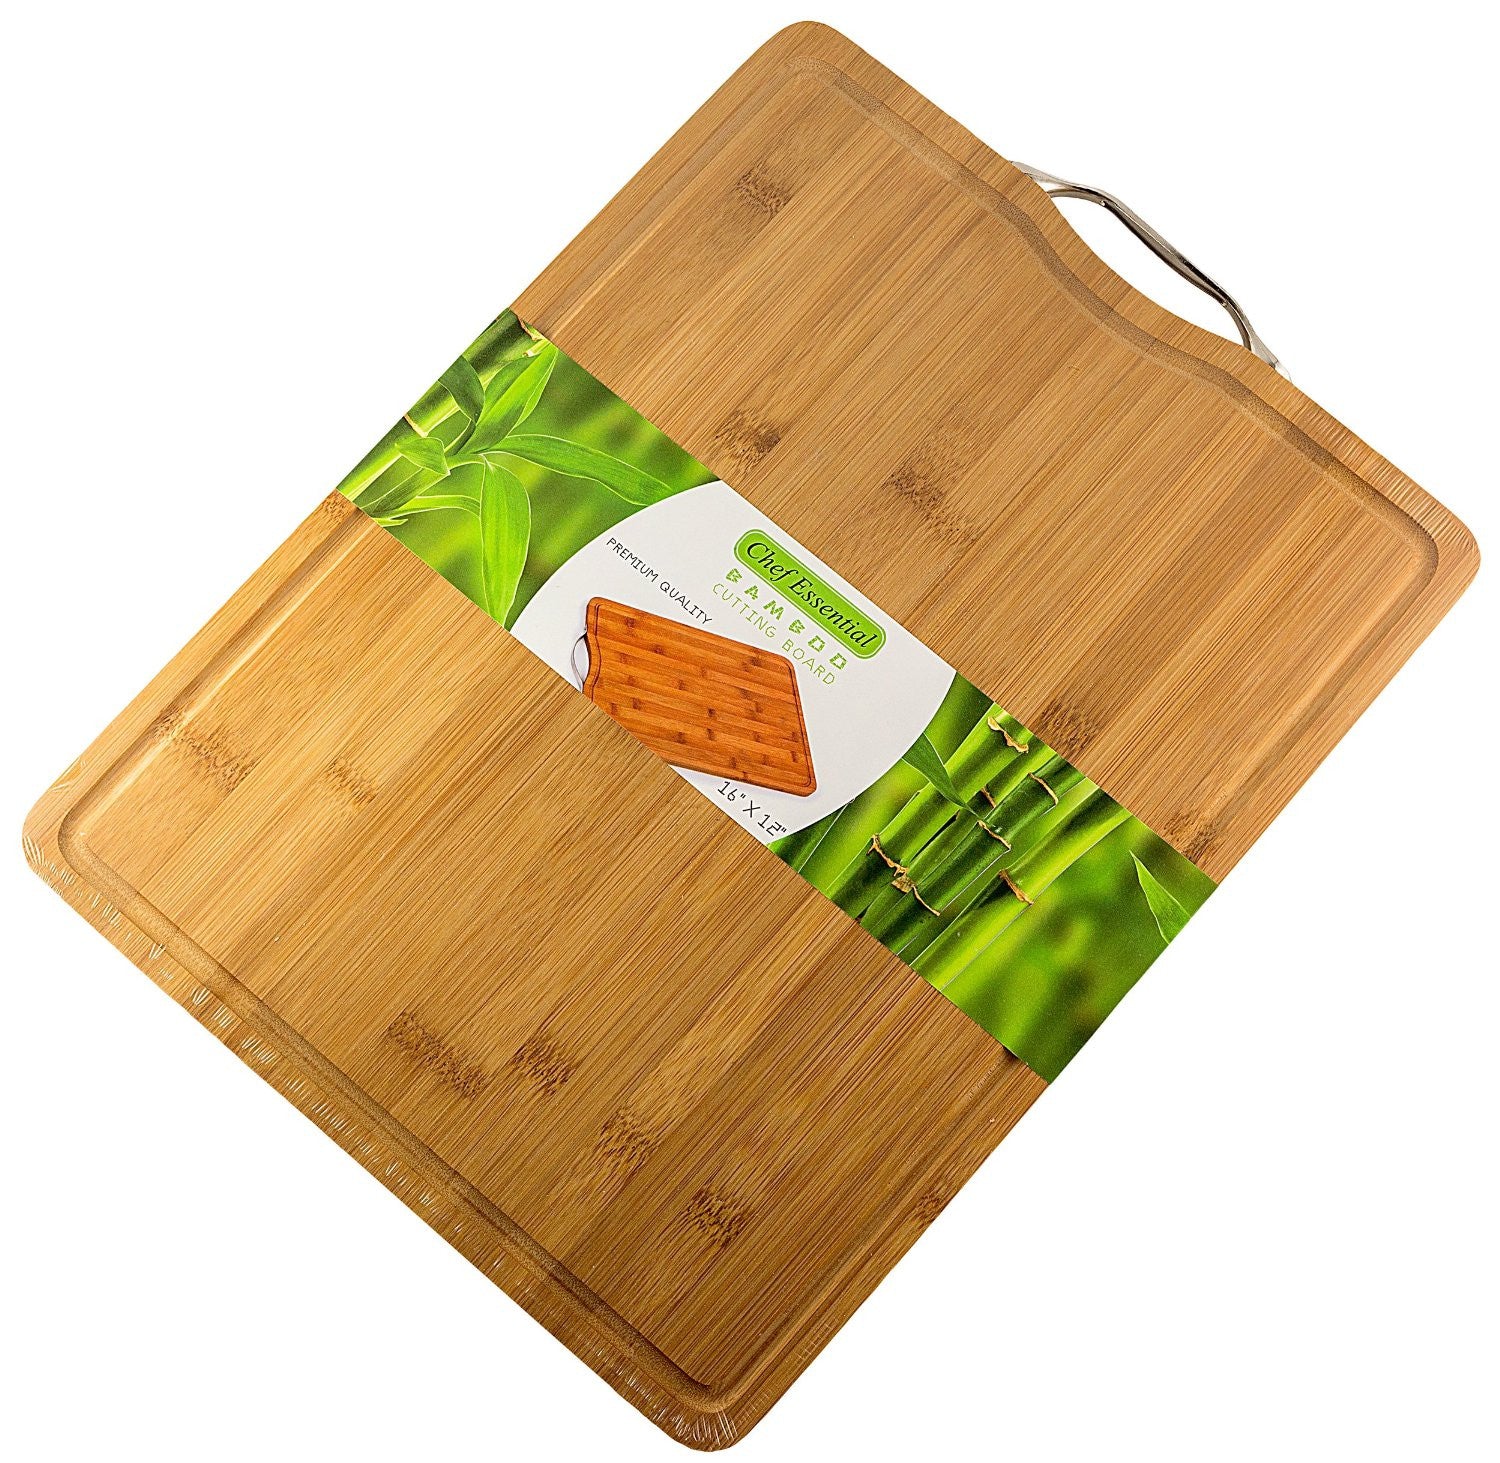 Cheap Large Thick Organic Meat Bamboo Cutting Board, Fish Bamboo